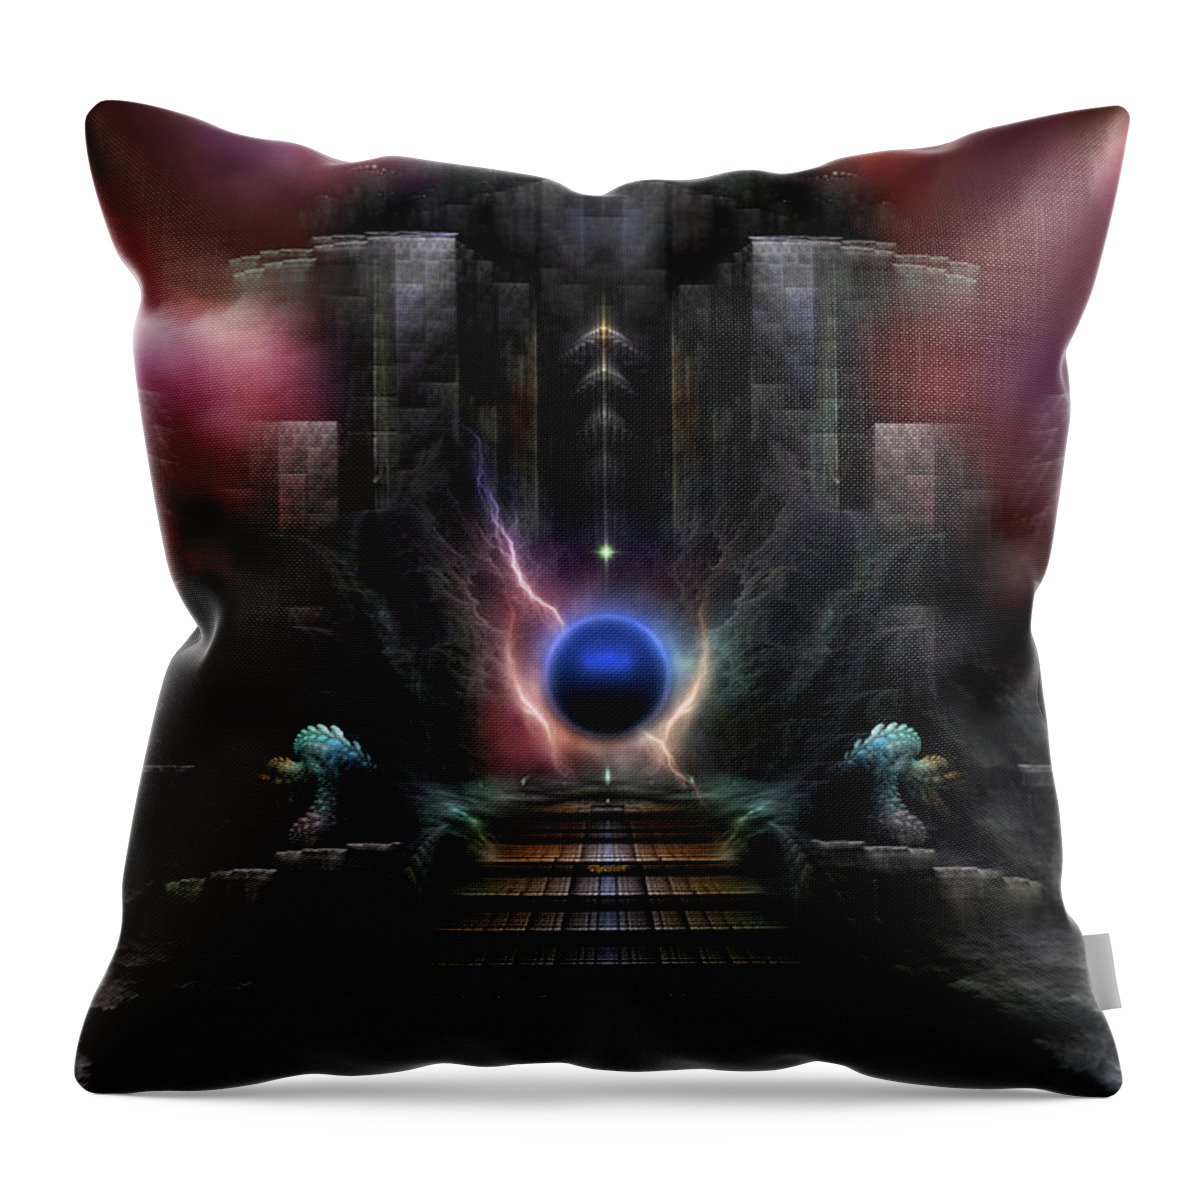 Realm Of Osphilium Throw Pillow featuring the digital art The Realm Of Osphilium Fractal Composition by Rolando Burbon